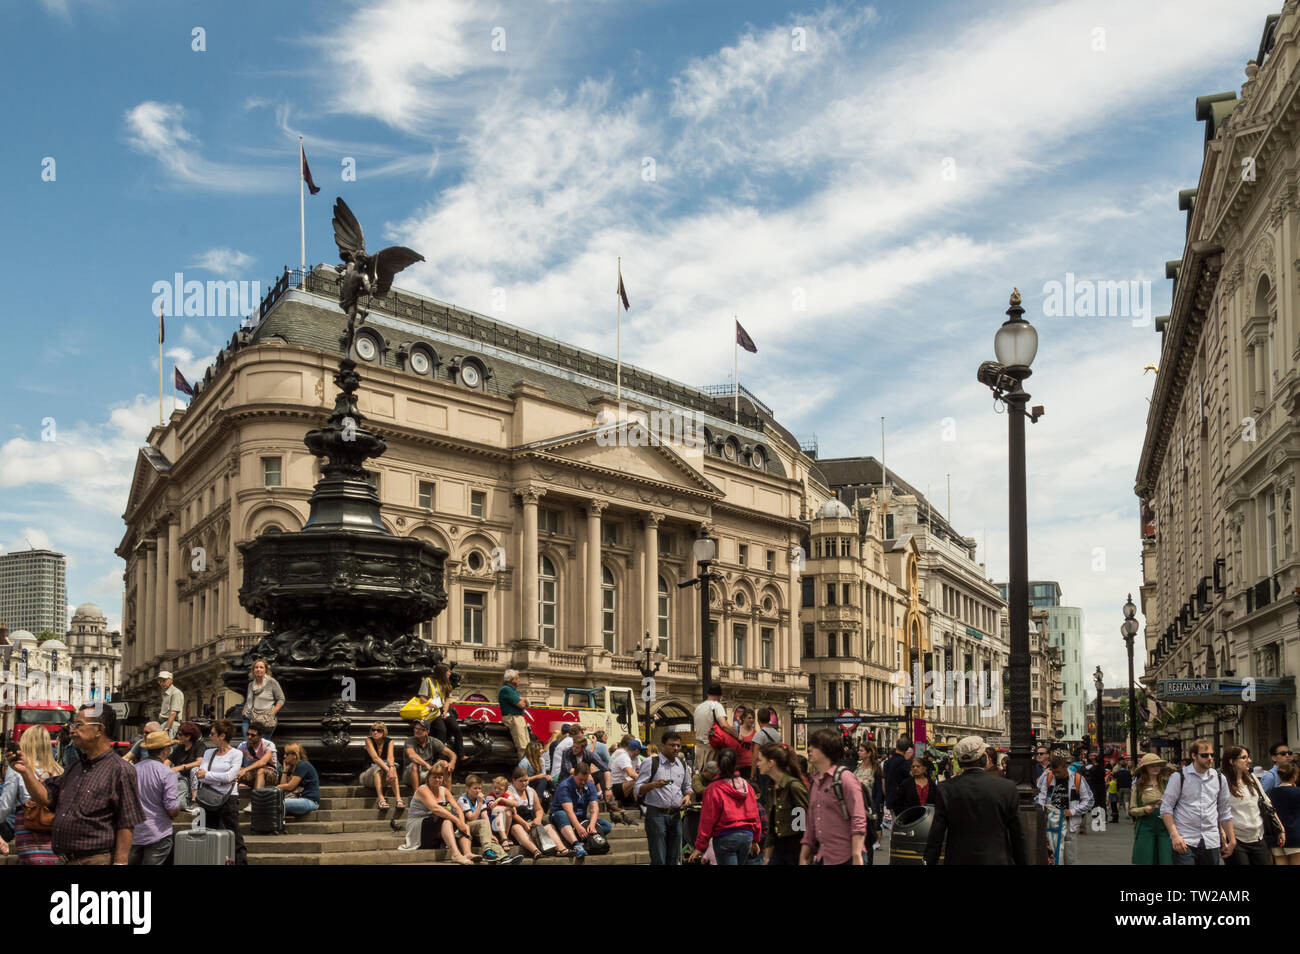 London - 6. Juli 2014: Piccadilly Circus mit Touristen überfüllt Stockfoto